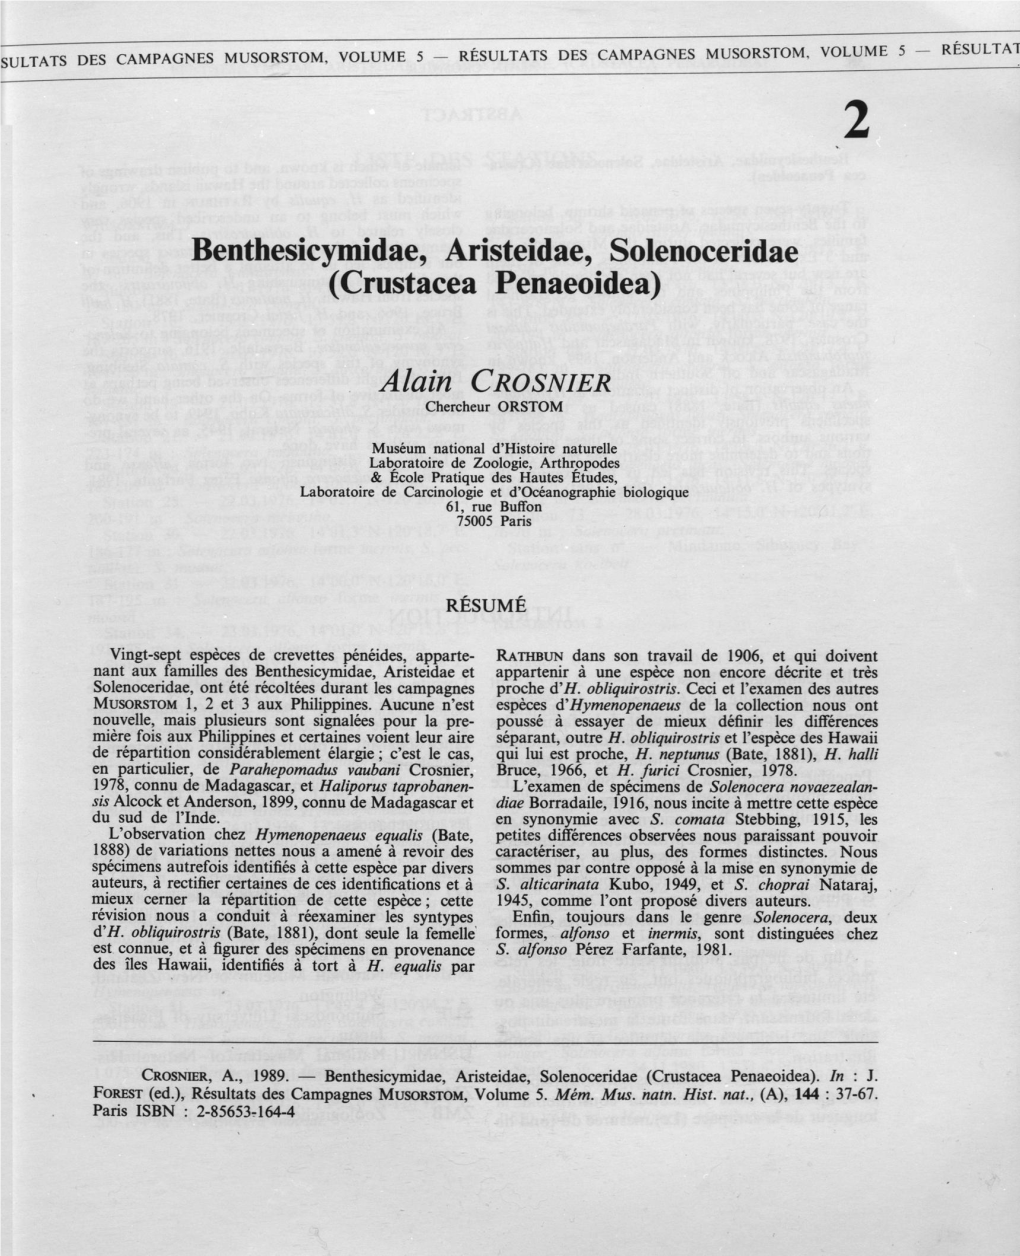 Benthesicymidae, Aristeidae, Solenoceridae (Crustacea Penaeoidea)